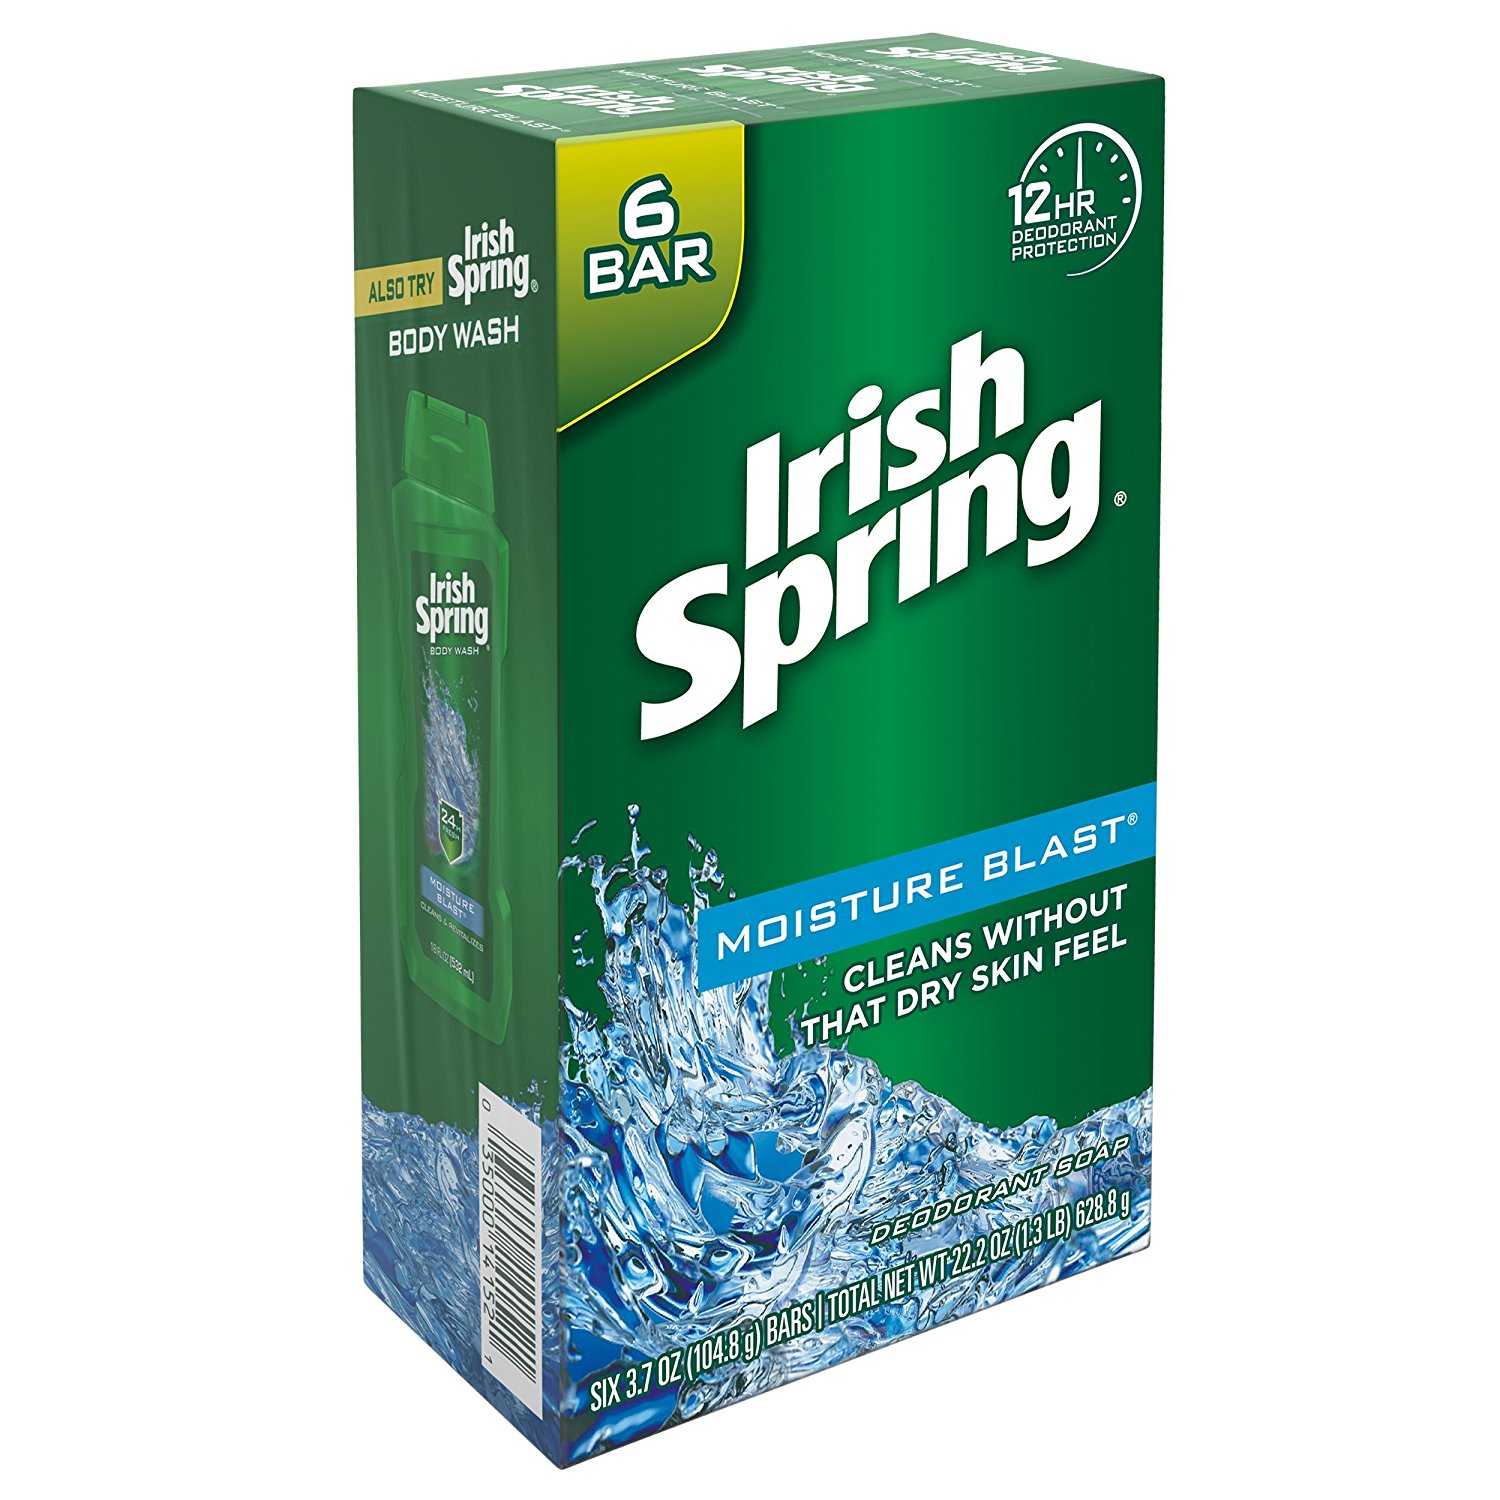 TWELVE 6-ct Packs of Irish Spring Moisture Blast Bar Soap Only $7.98! 72 Bars!!